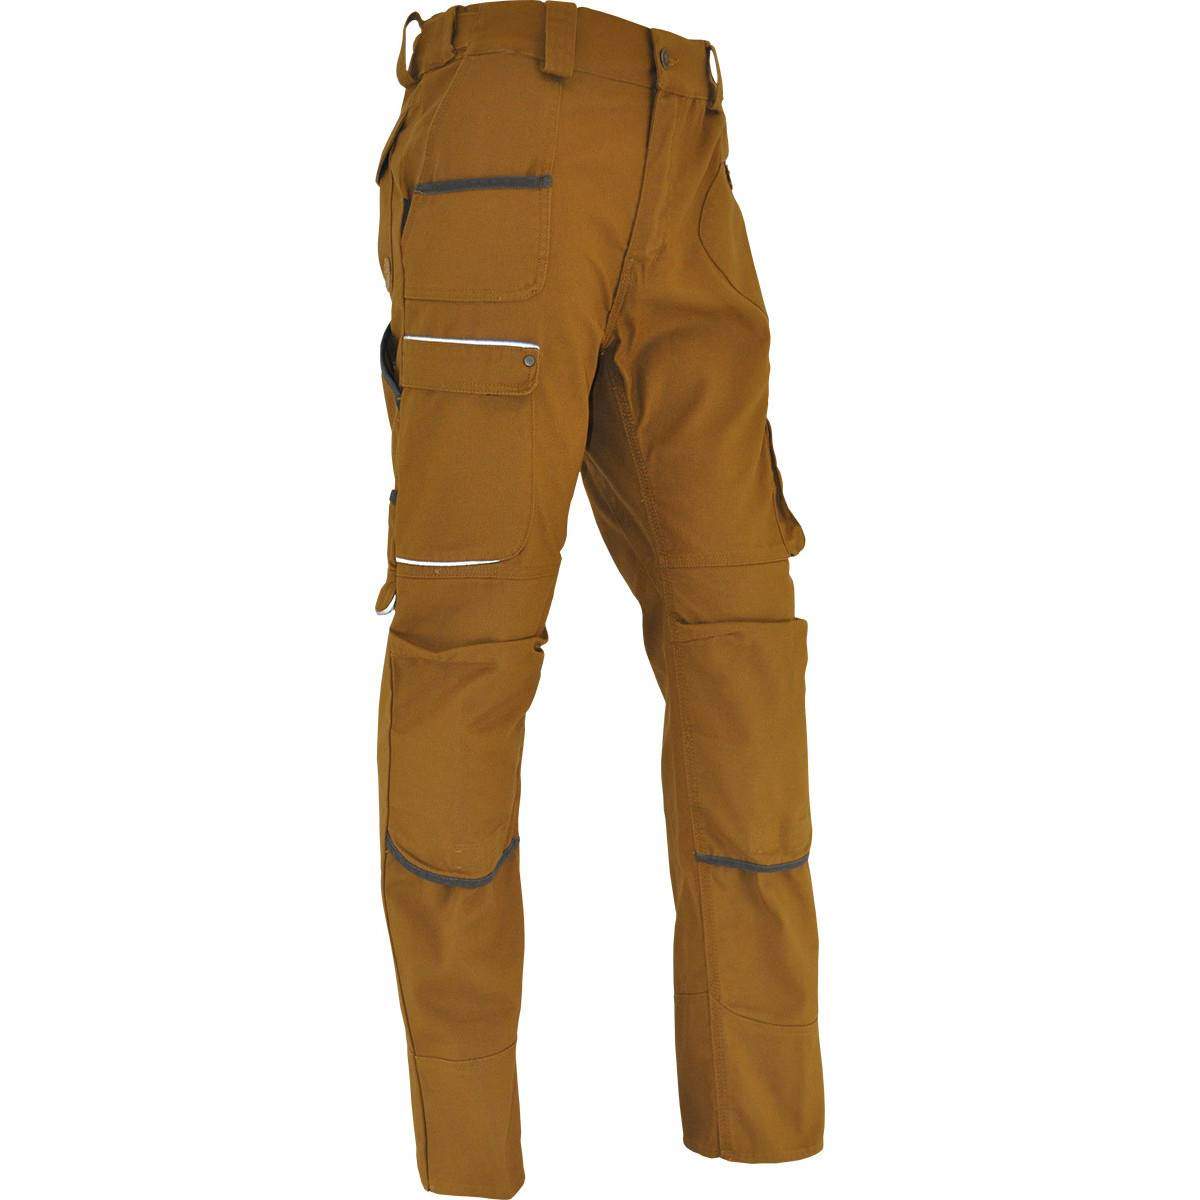 Pantalones de trabajo SAHARA talla 48, bronce